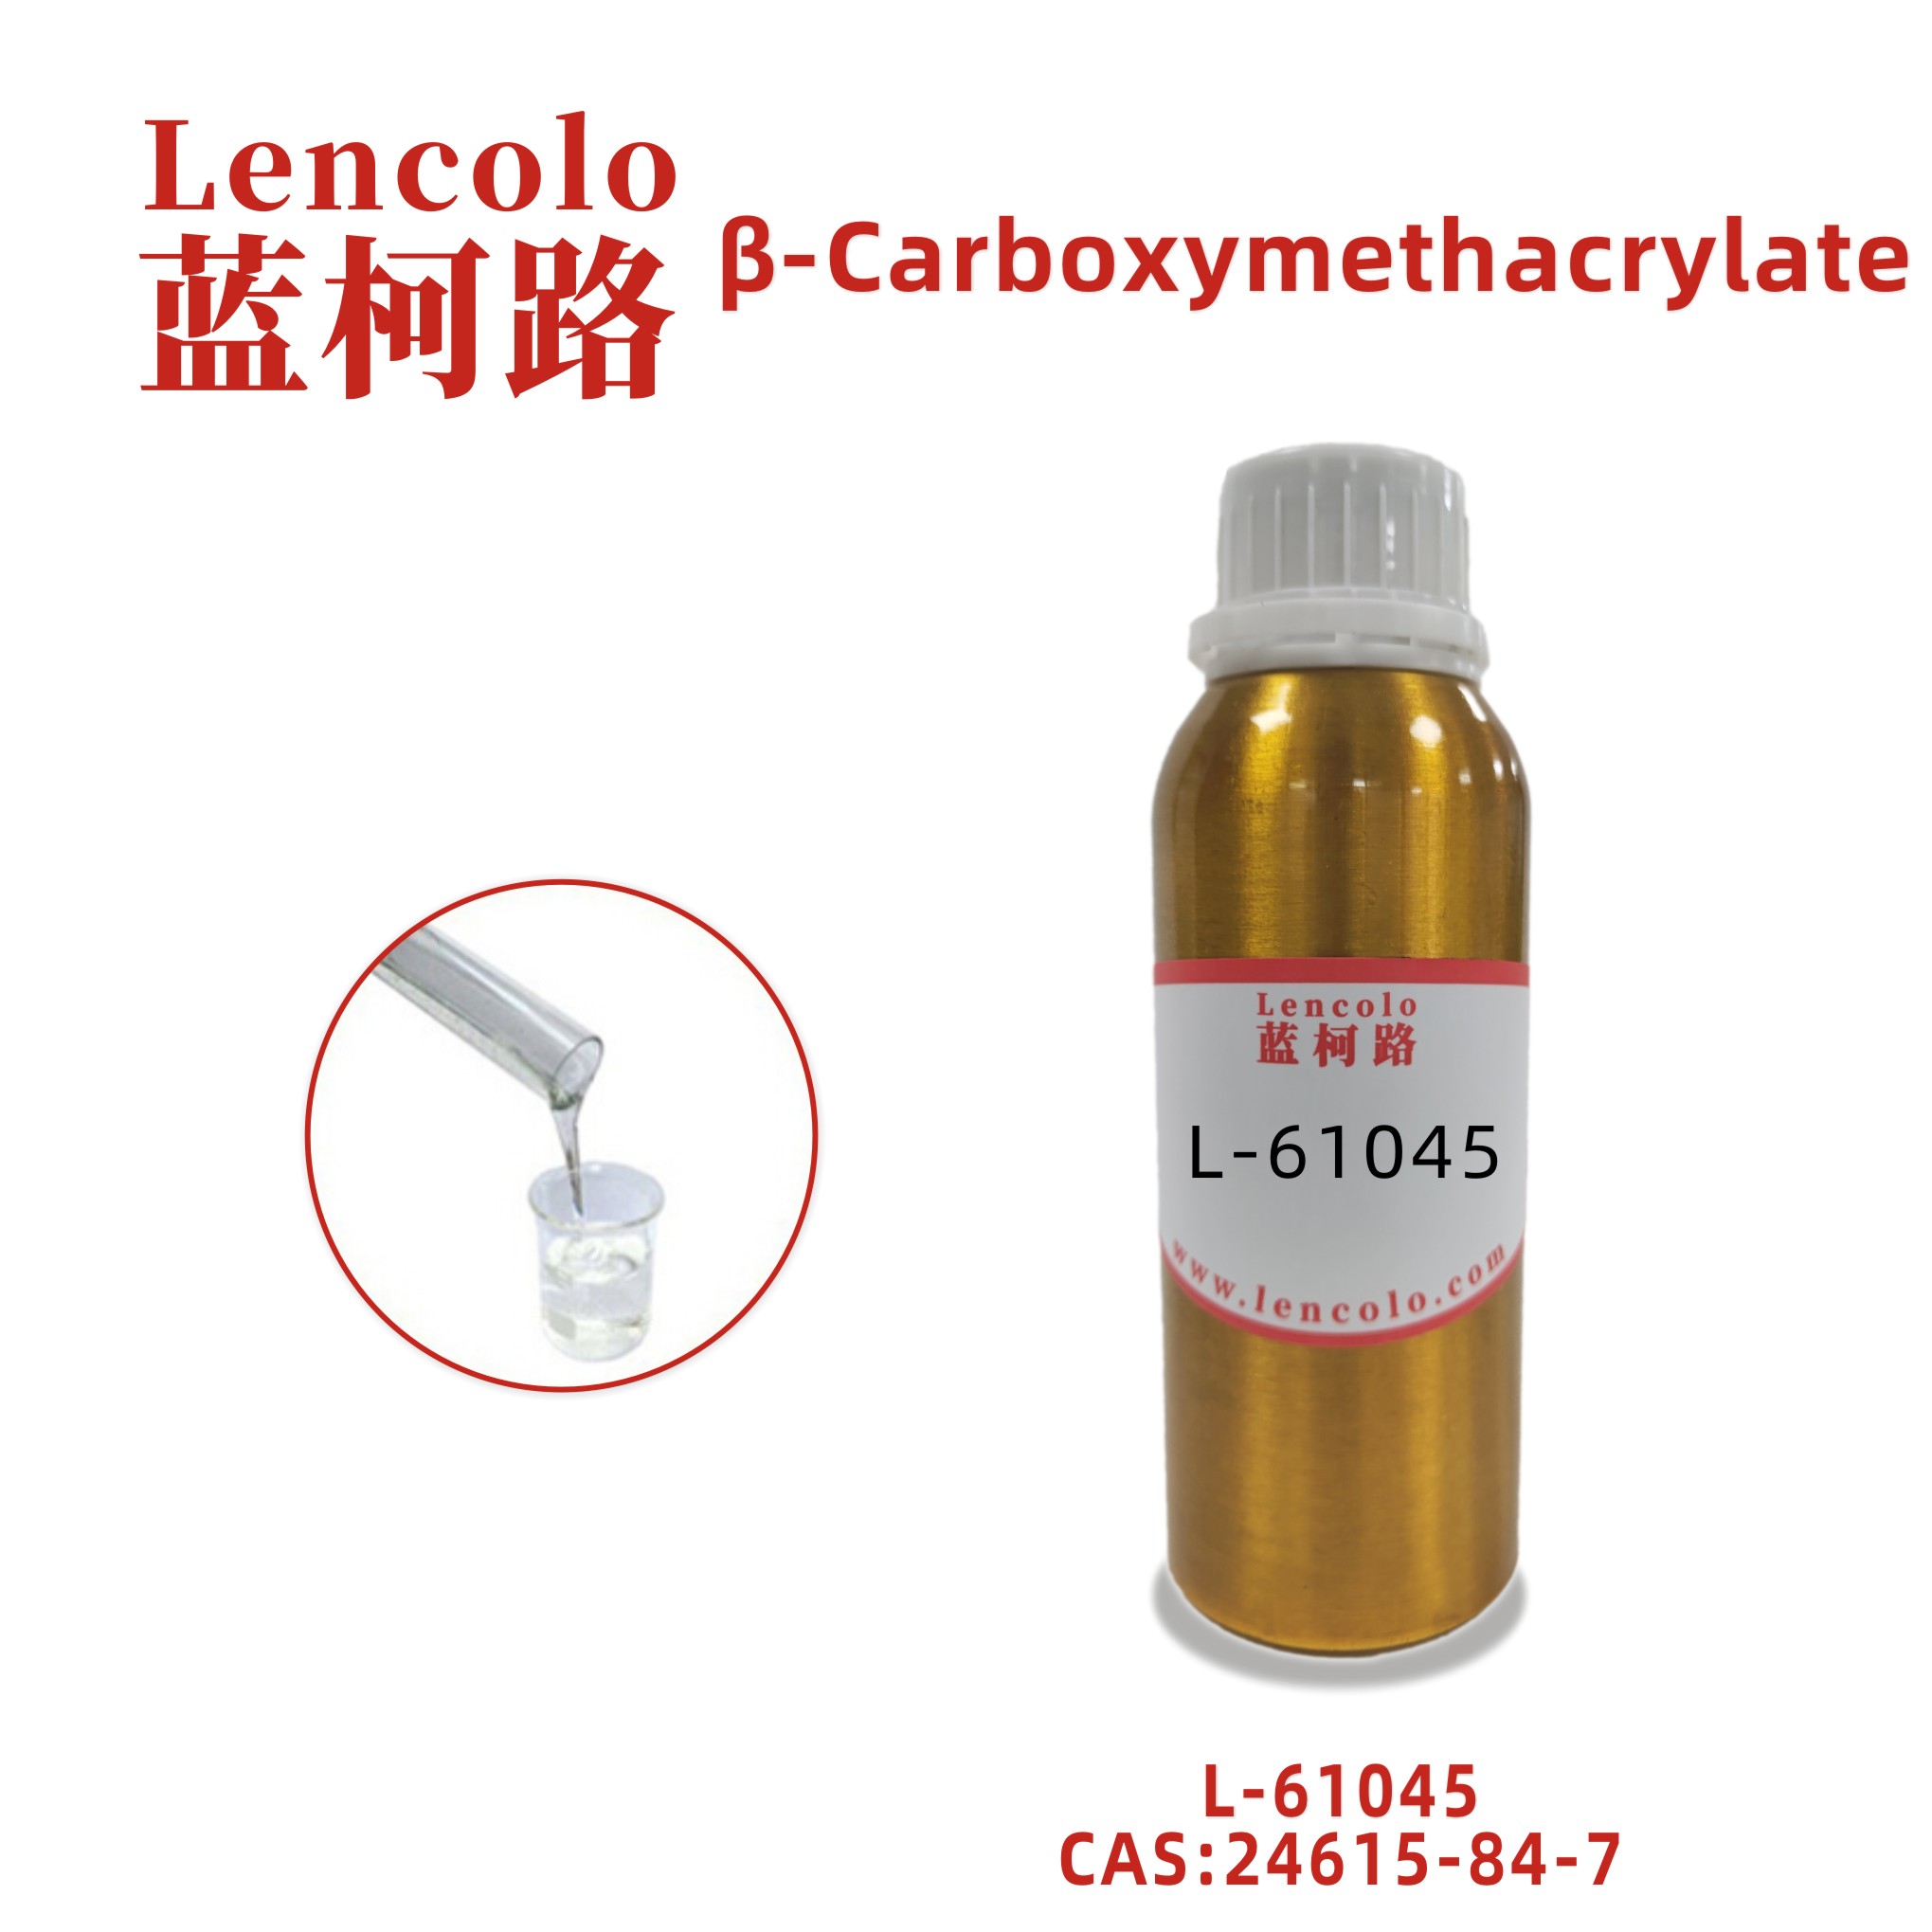 L-61045 (β-CEA) β-Carboxymethacrylate